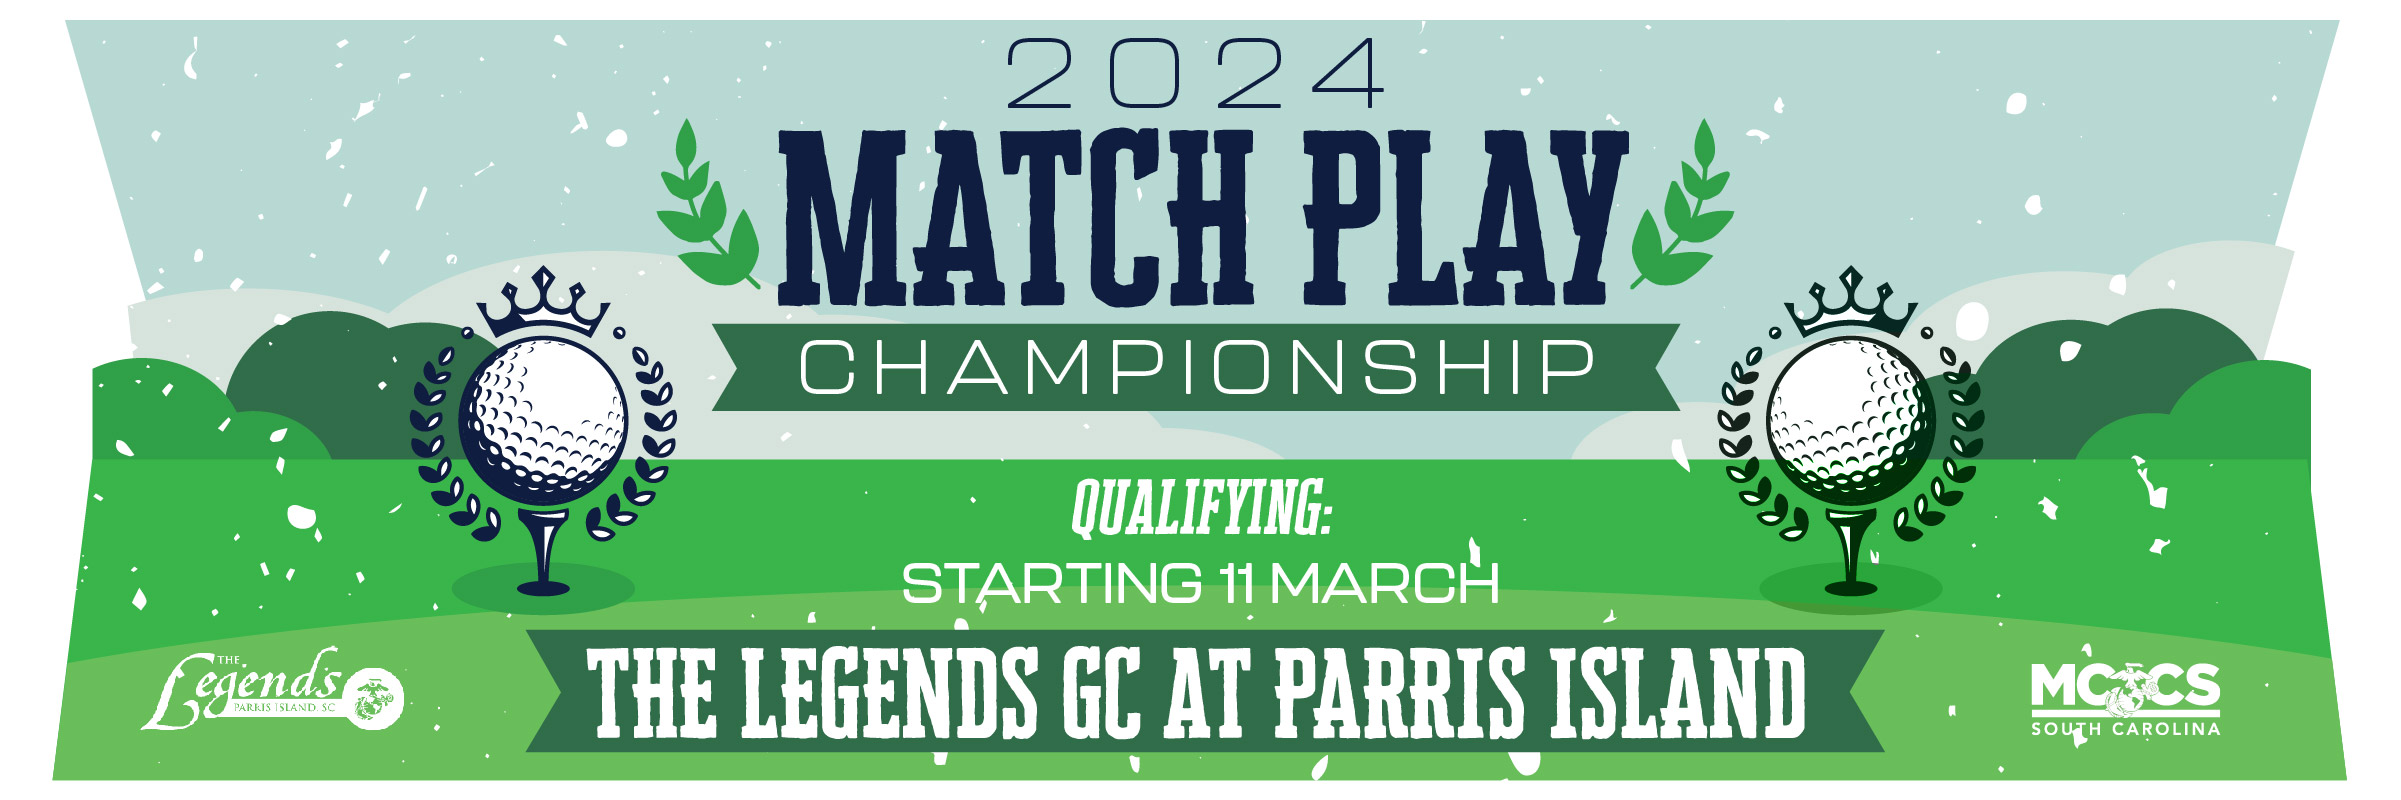 3-11 Match Play Championship_WEB.jpg